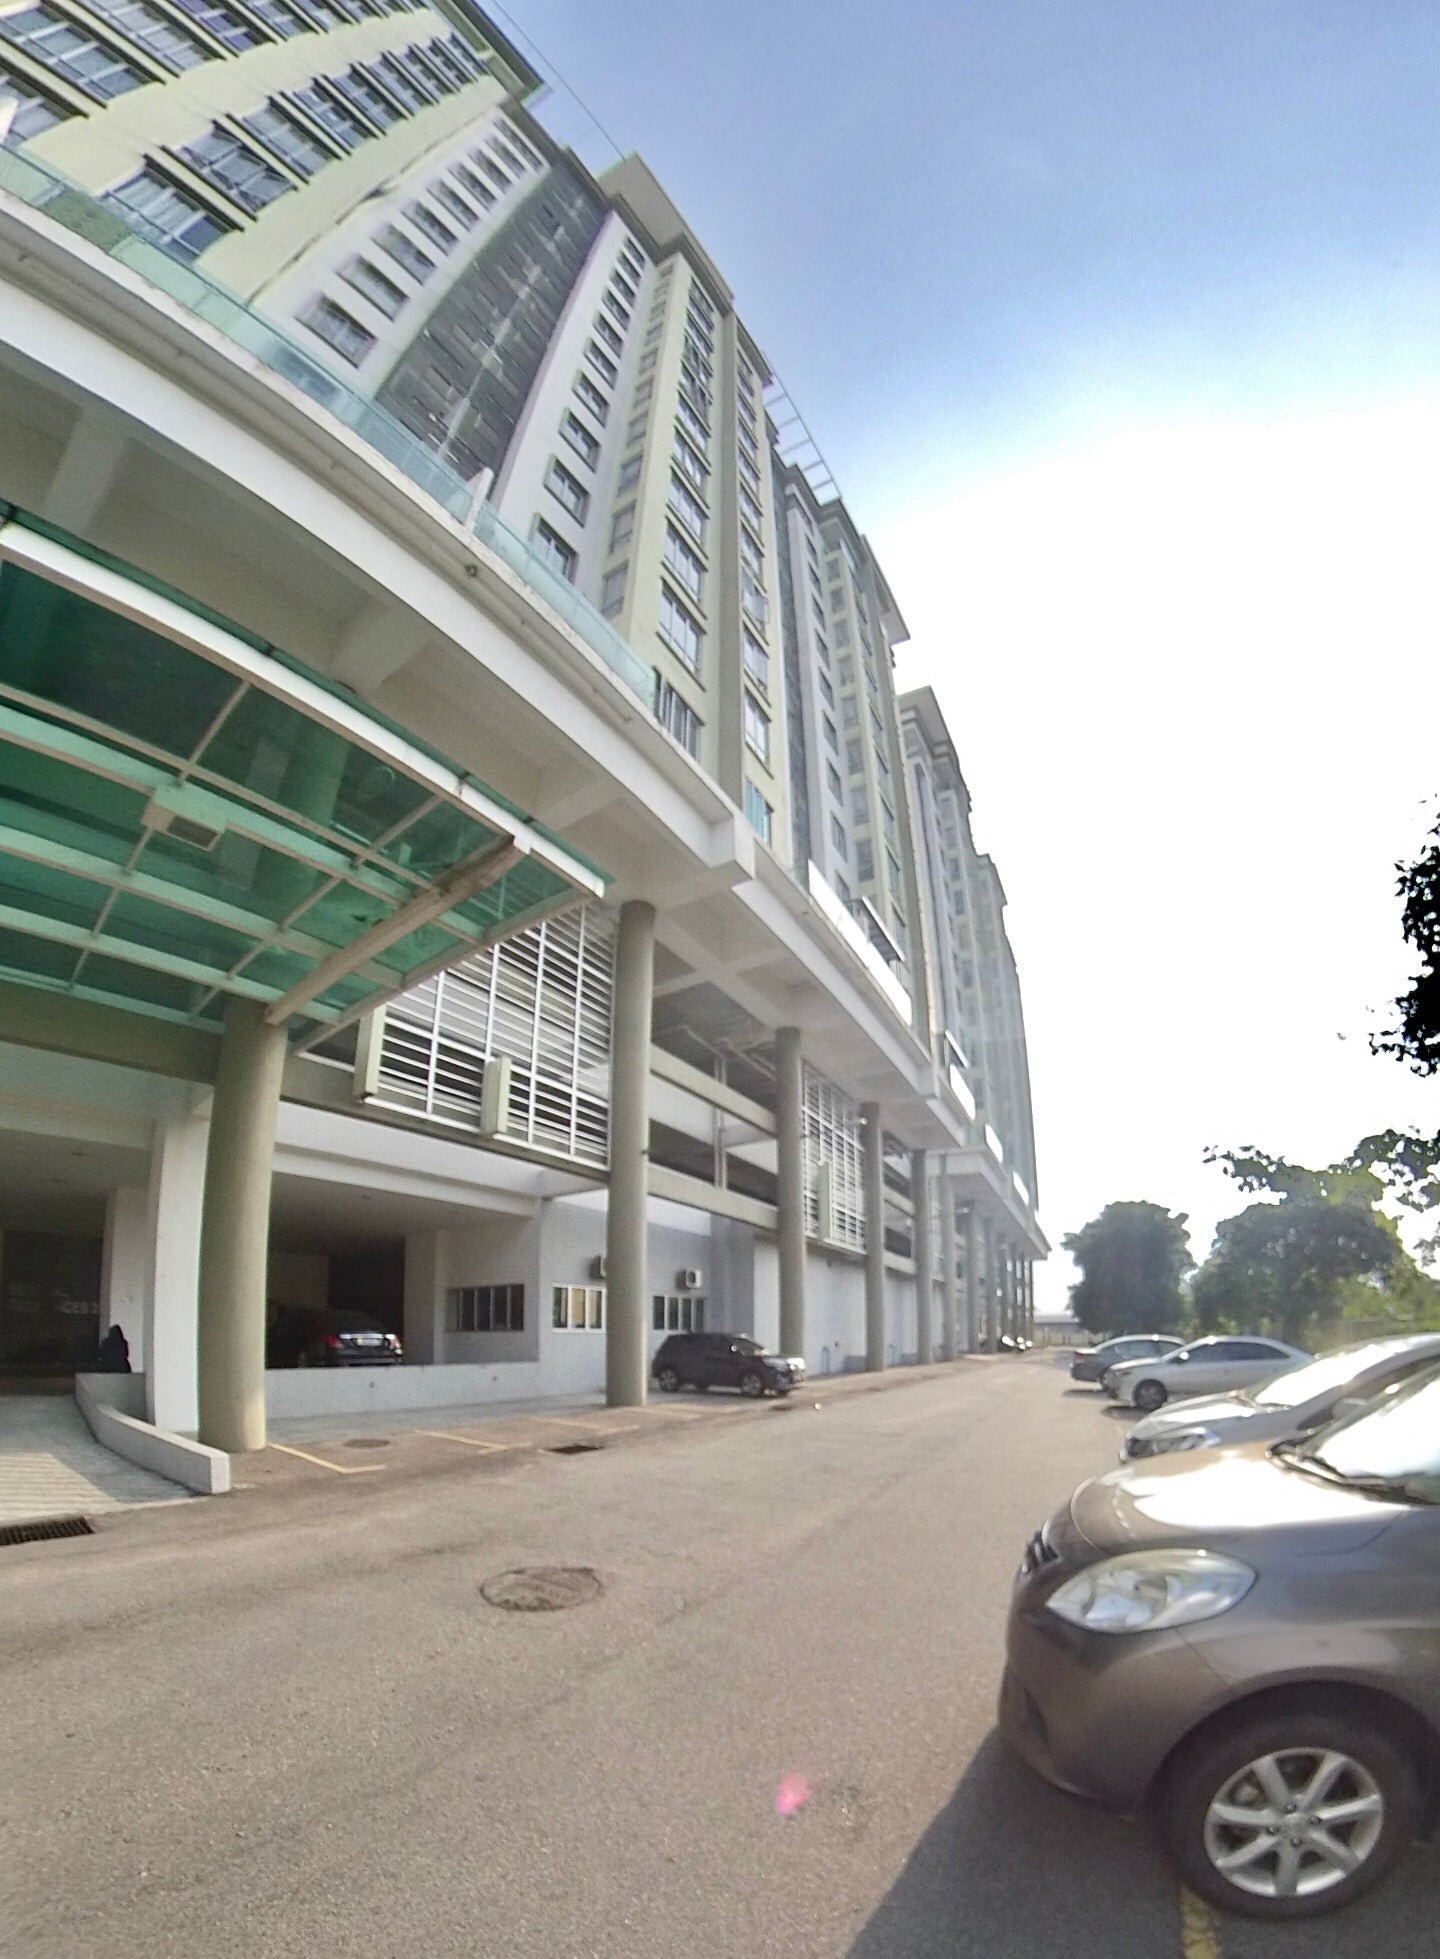 (1 MONTH DEPOSIT) - RM290 per month - The Double @ Sentral Residences 1 & 2, Taman Kajang Sentral, Selangor Darul Ehsan